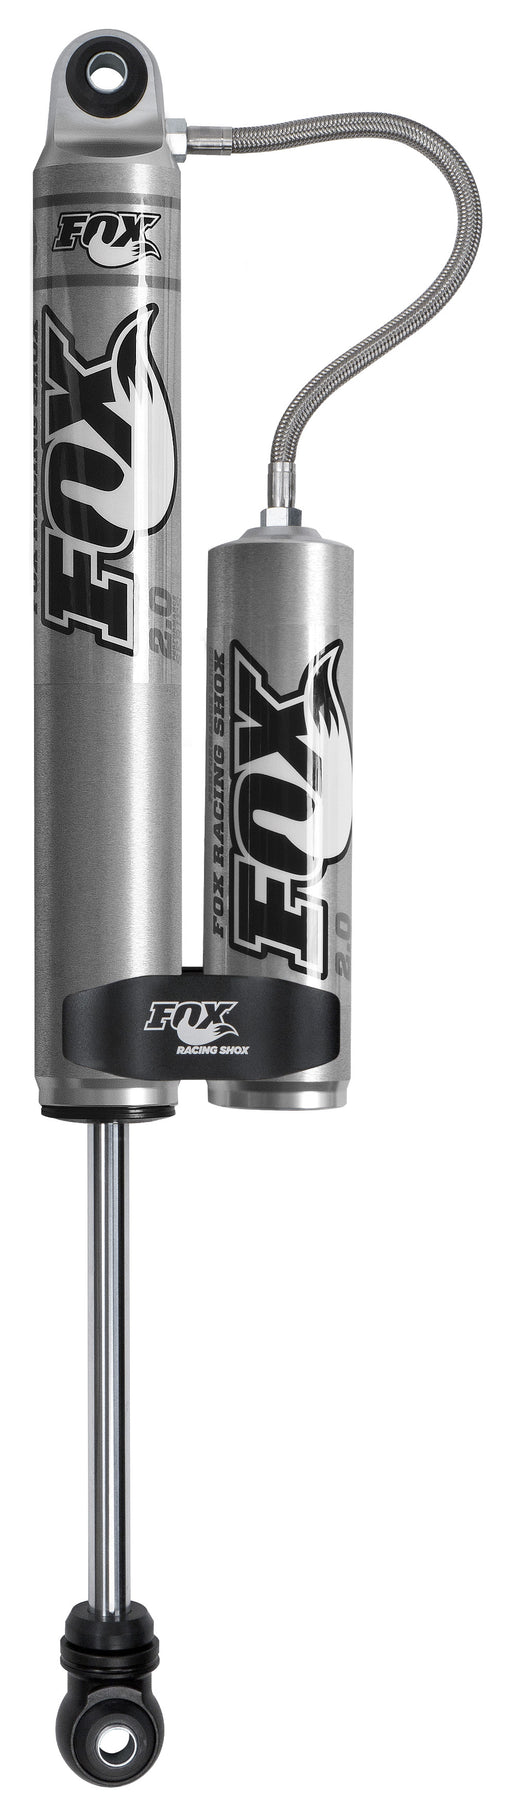 Fox Racing Shox 985-24-012 Performance Series Shock Absorber